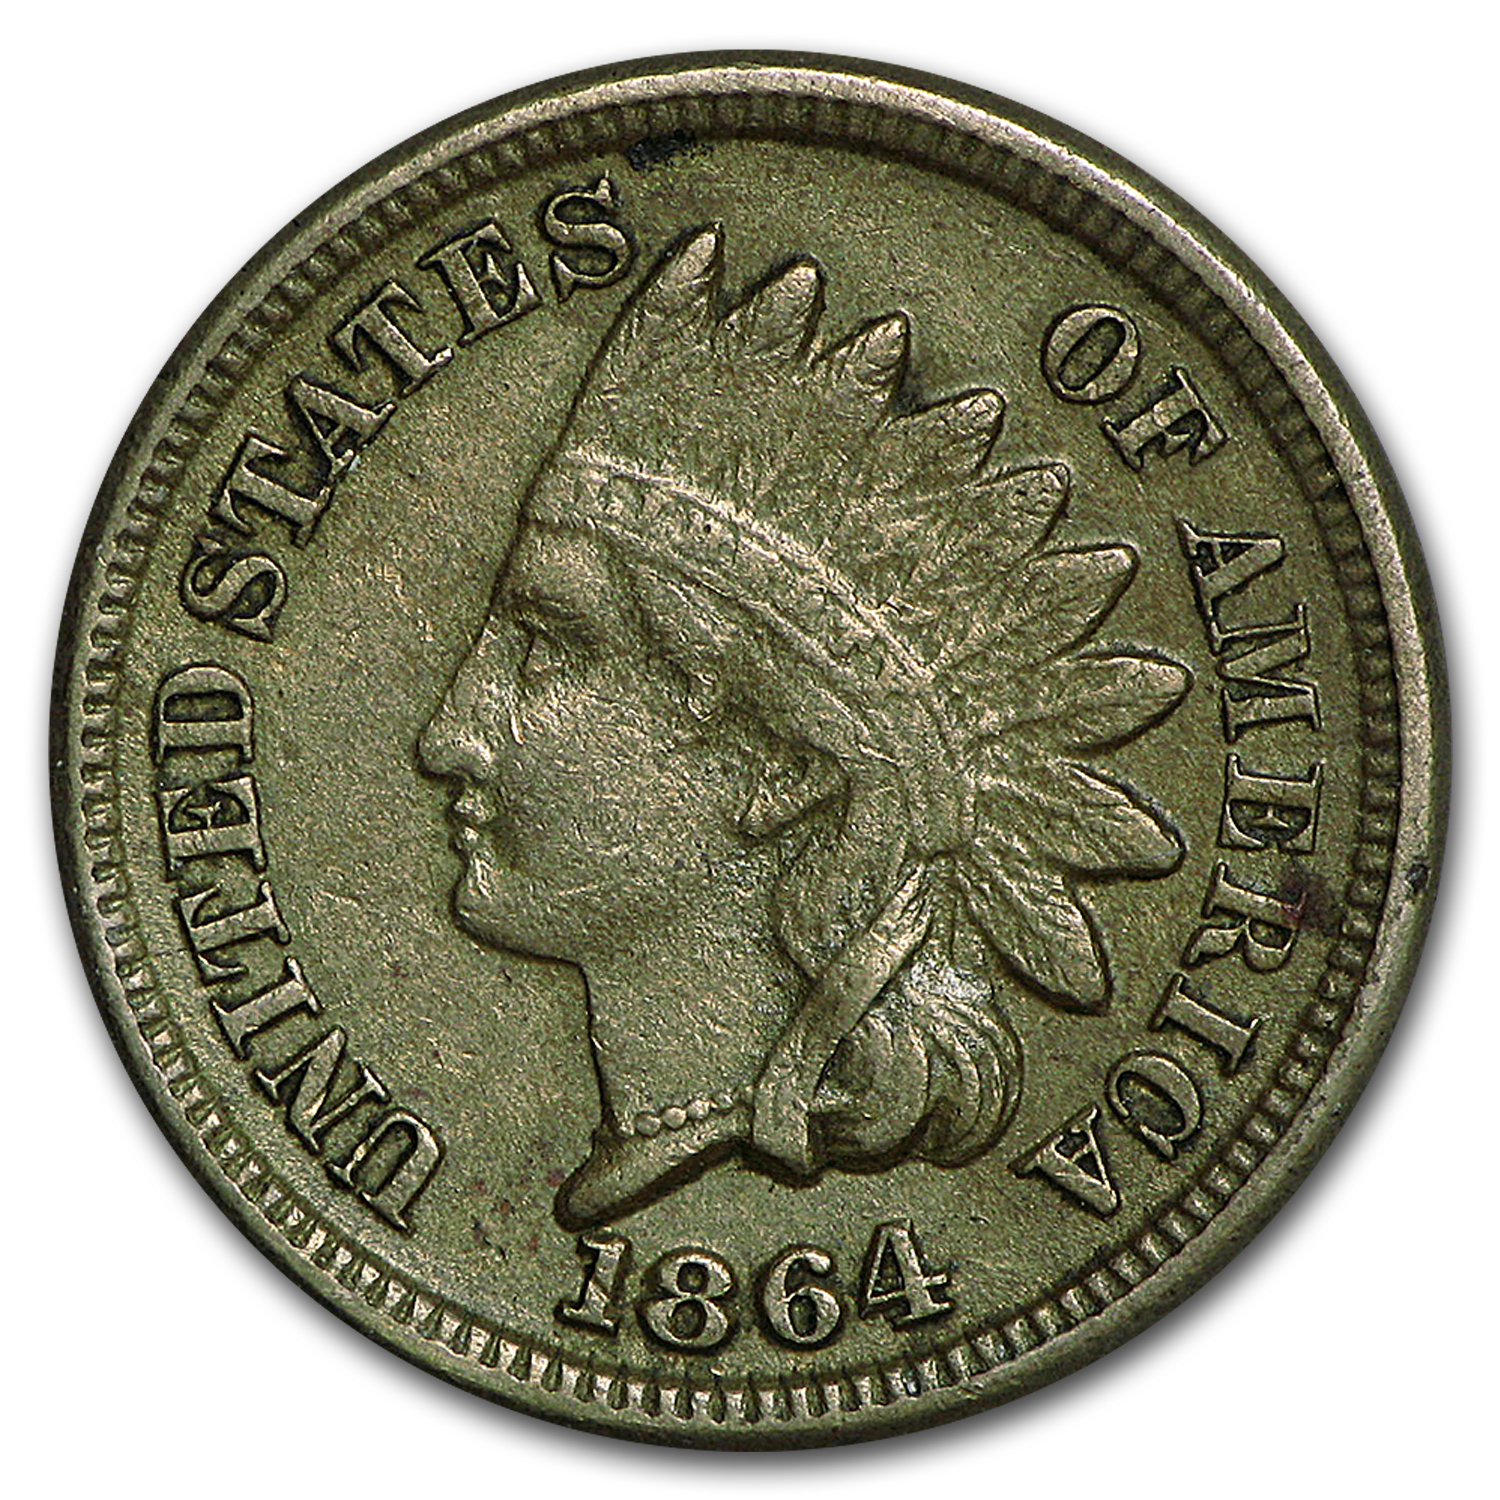 Buy 1864 Indian Head Cent Copper-Nickel XF